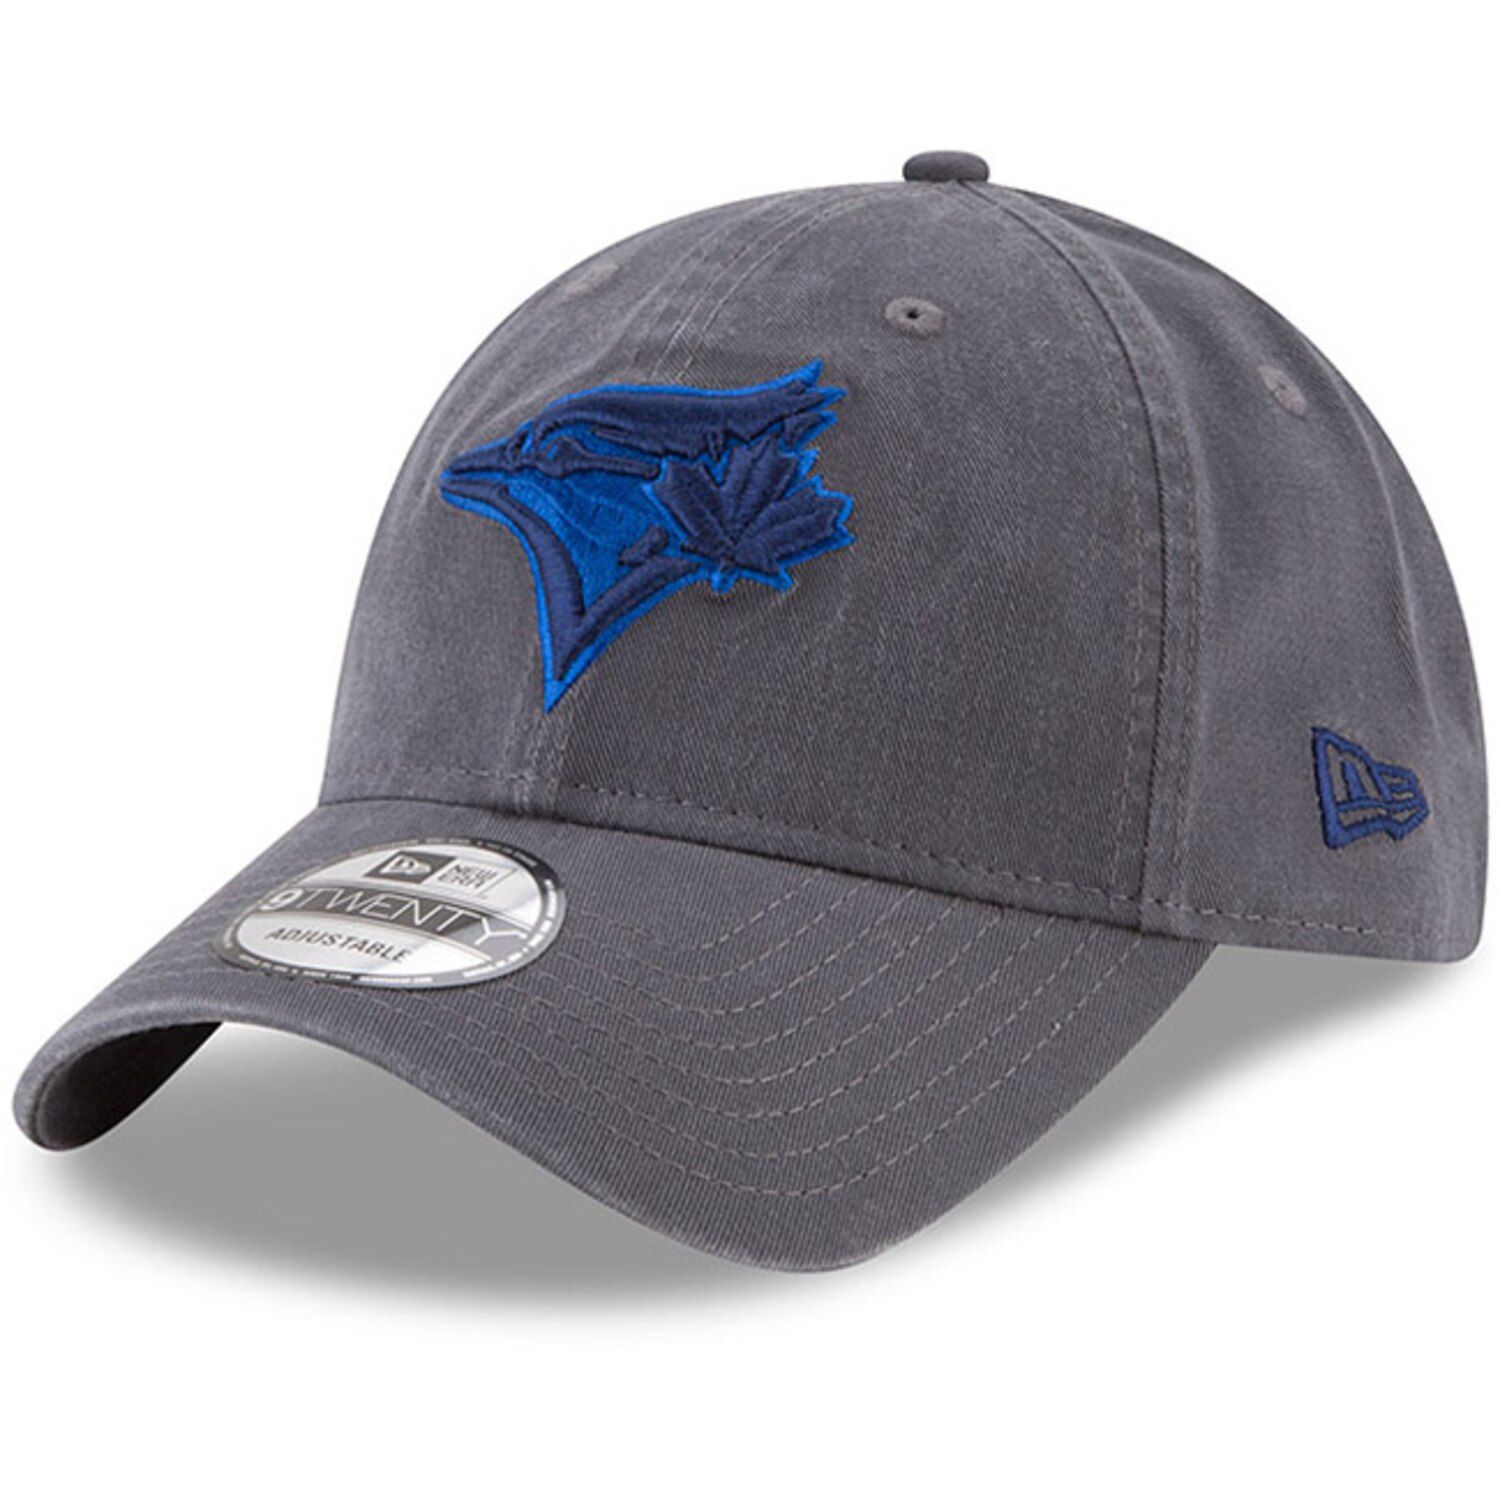 blue jays pride hat